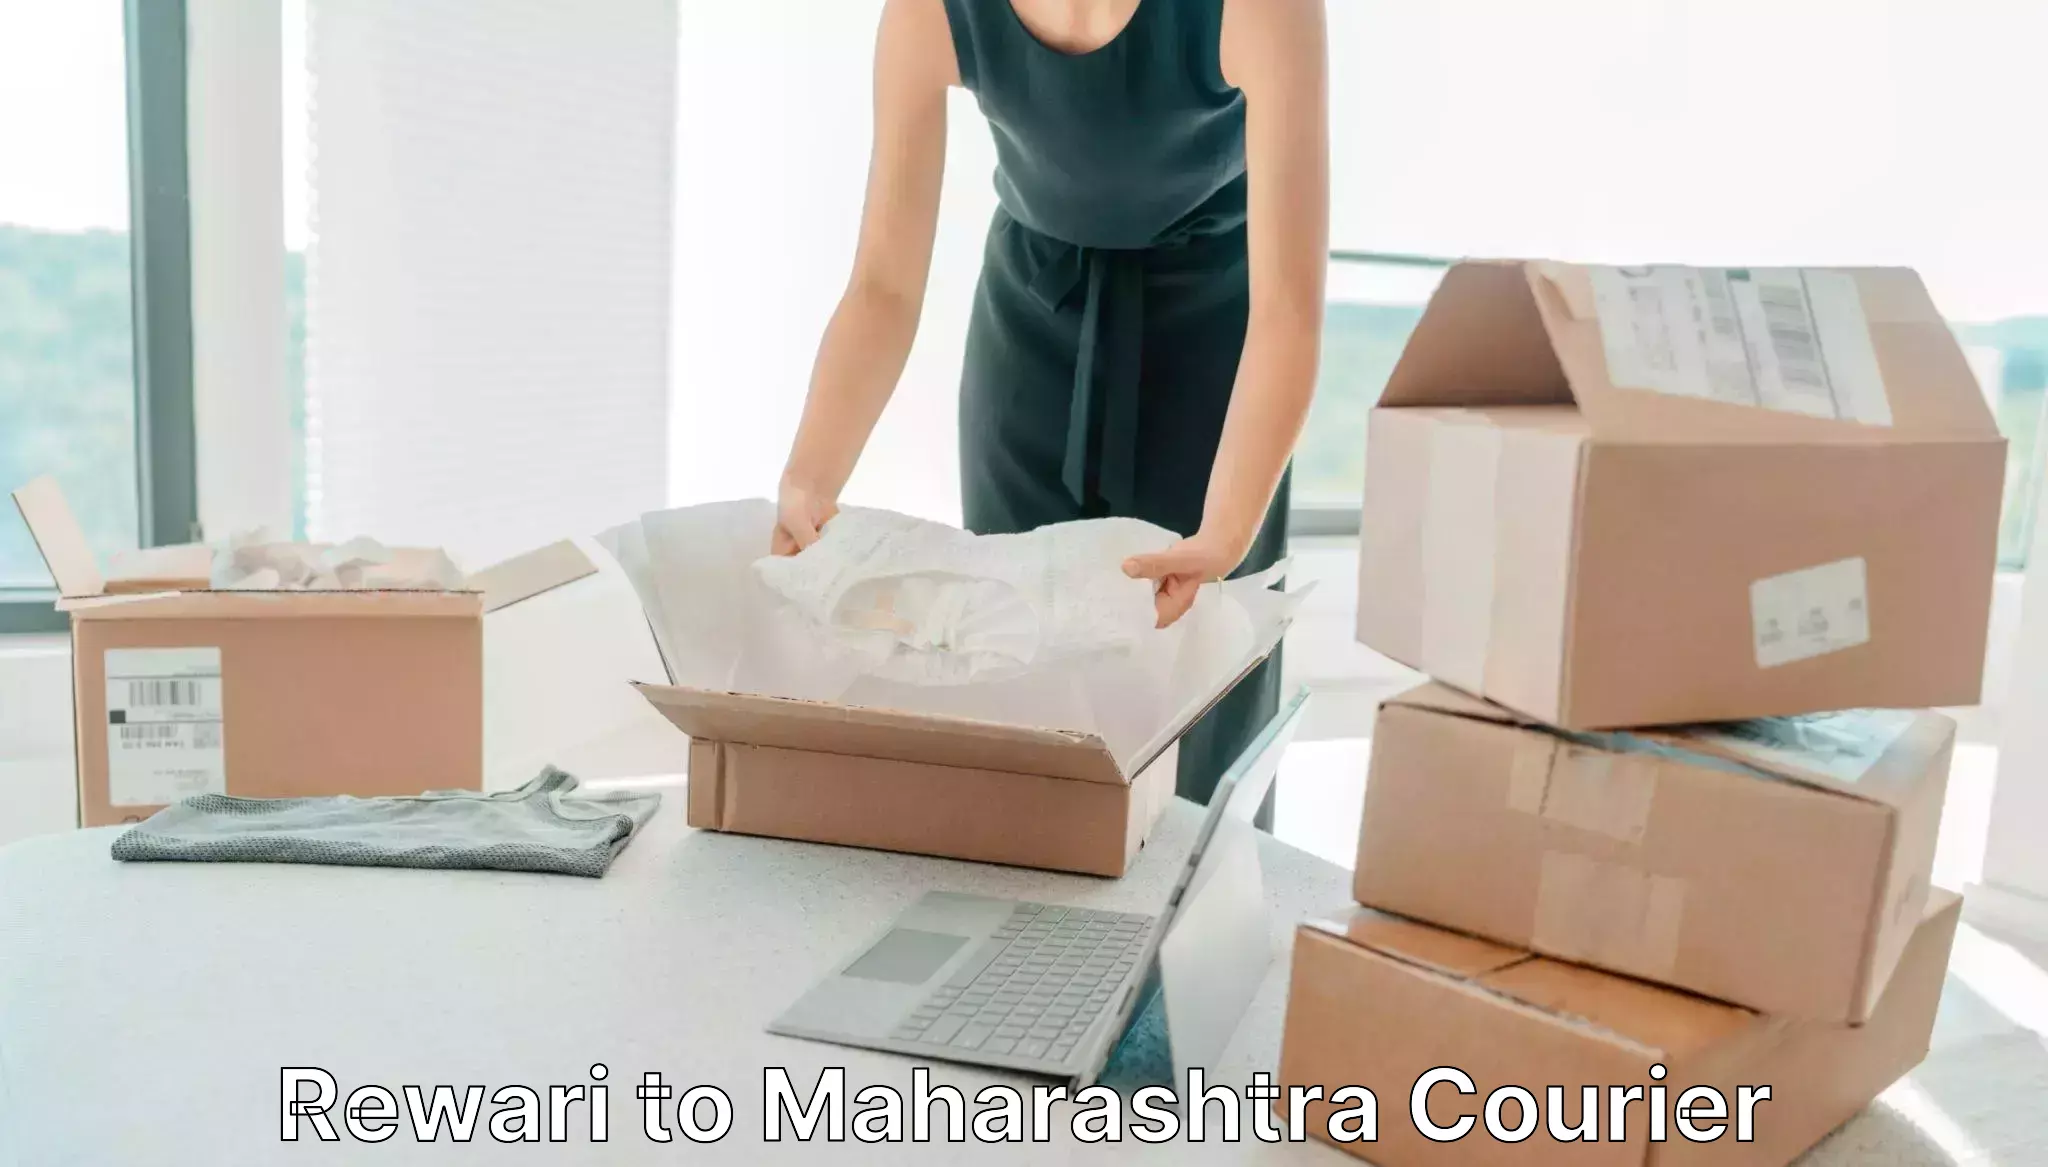 Full-service courier options Rewari to Igatpuri